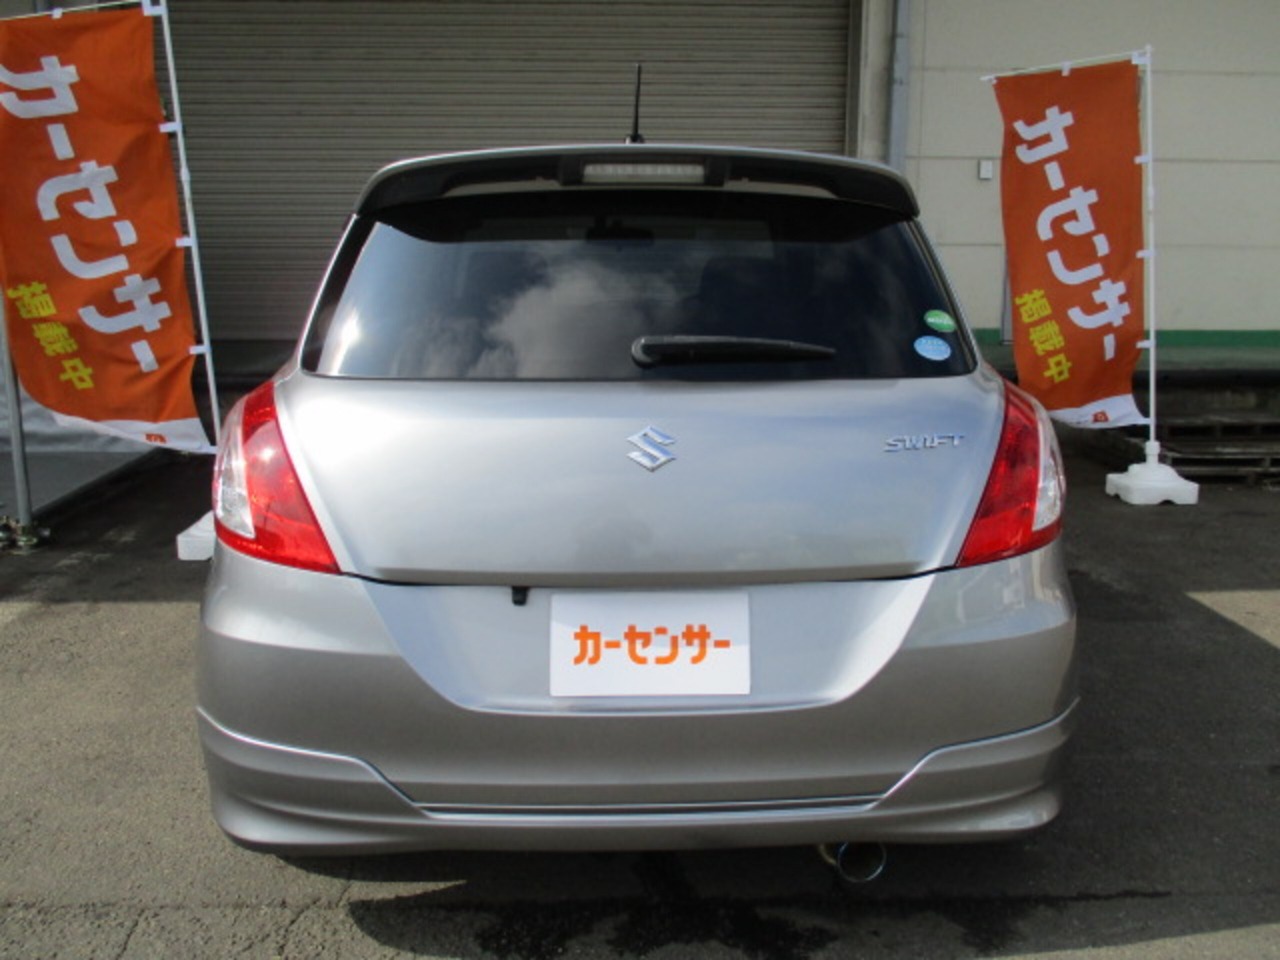 Suzuki Swift 2012 (H24) - ATC Japan